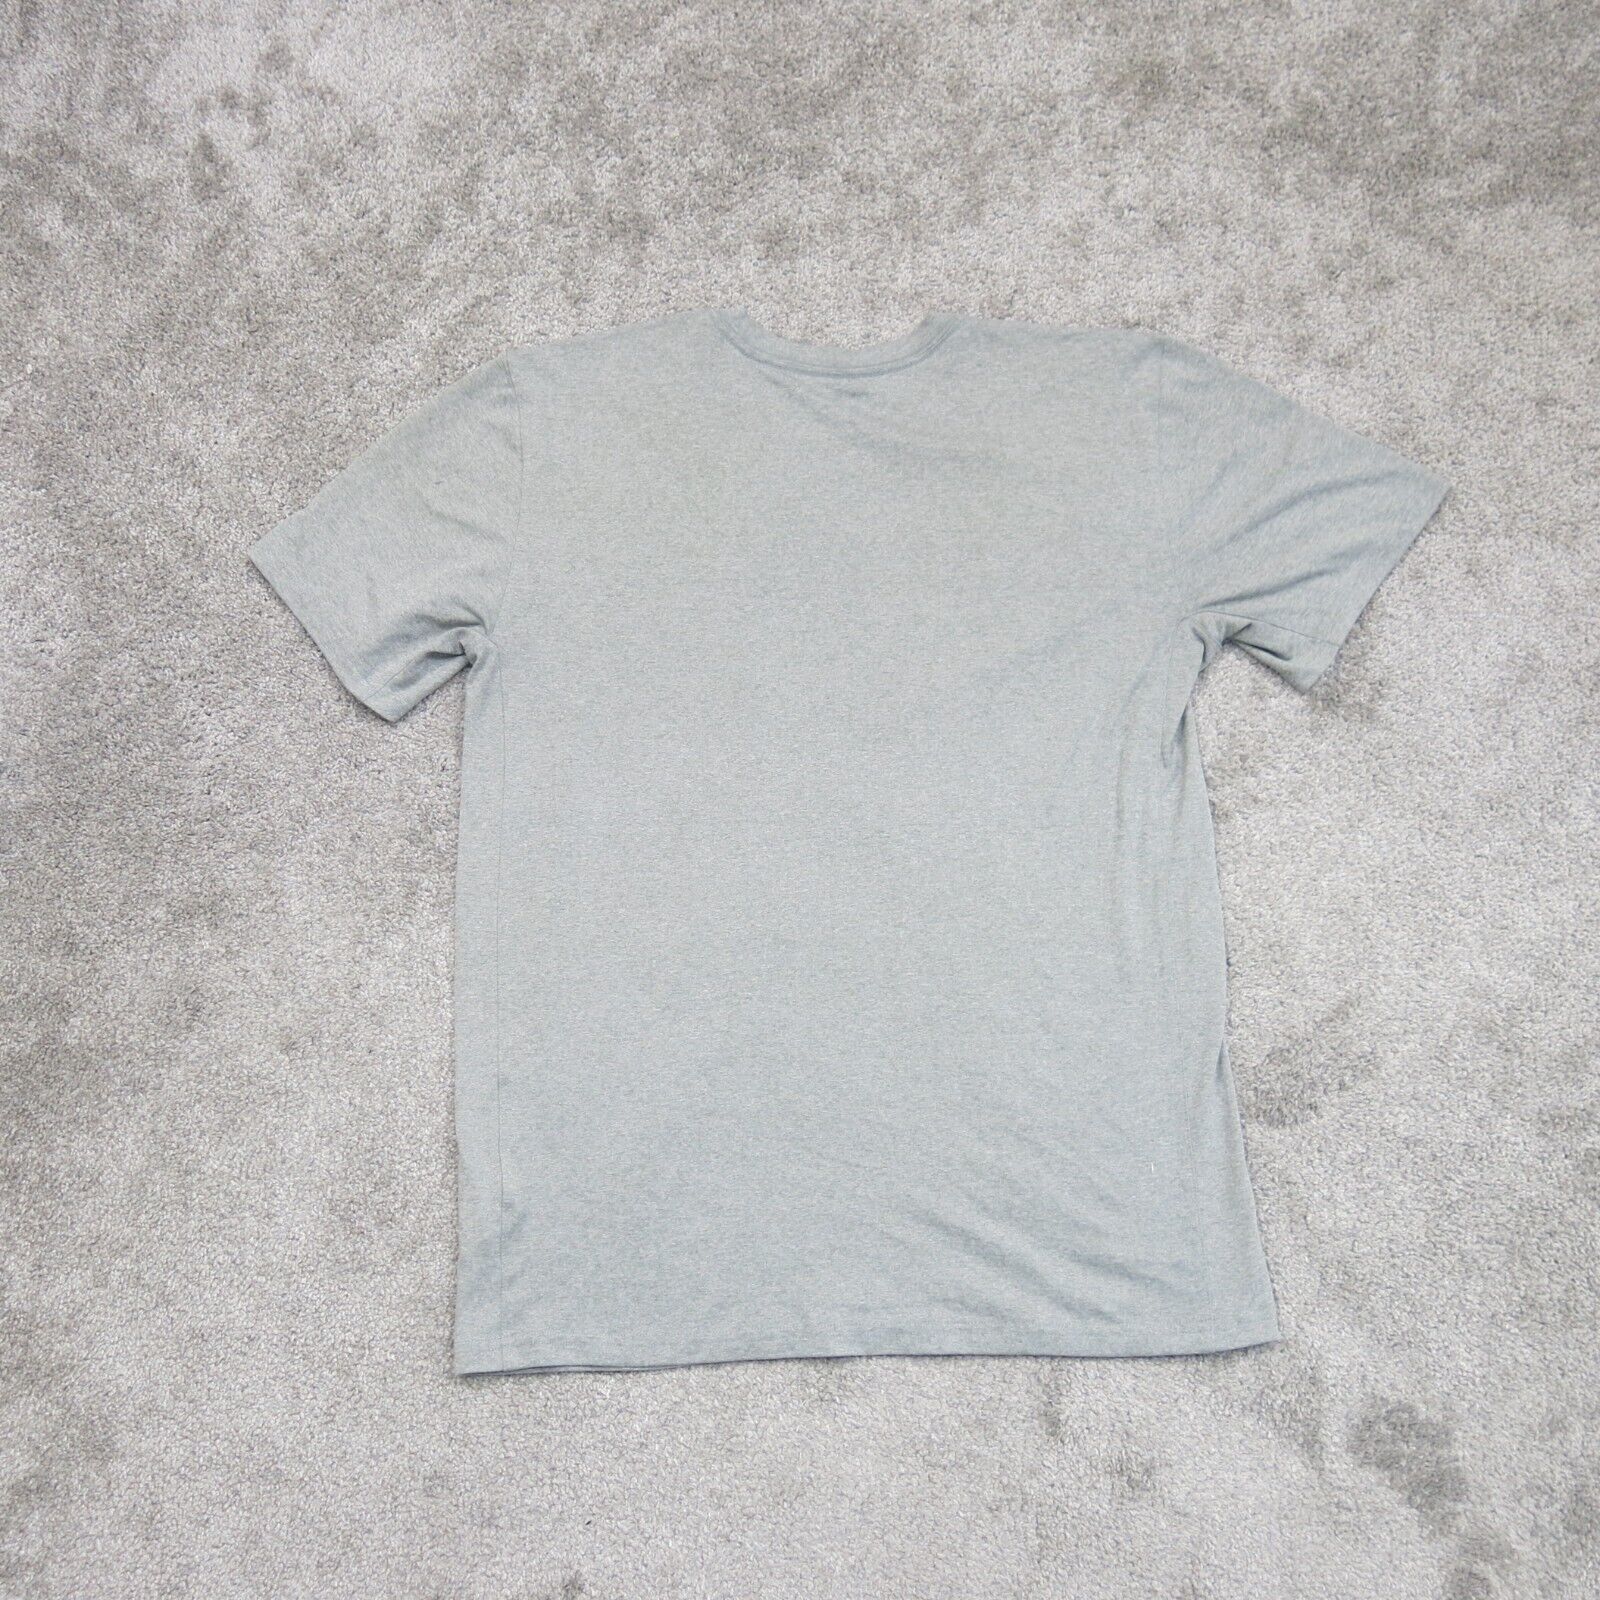 NIKE Regular Fit Graphic Print Crew-Neck T-Shirt For Men (Black, S)